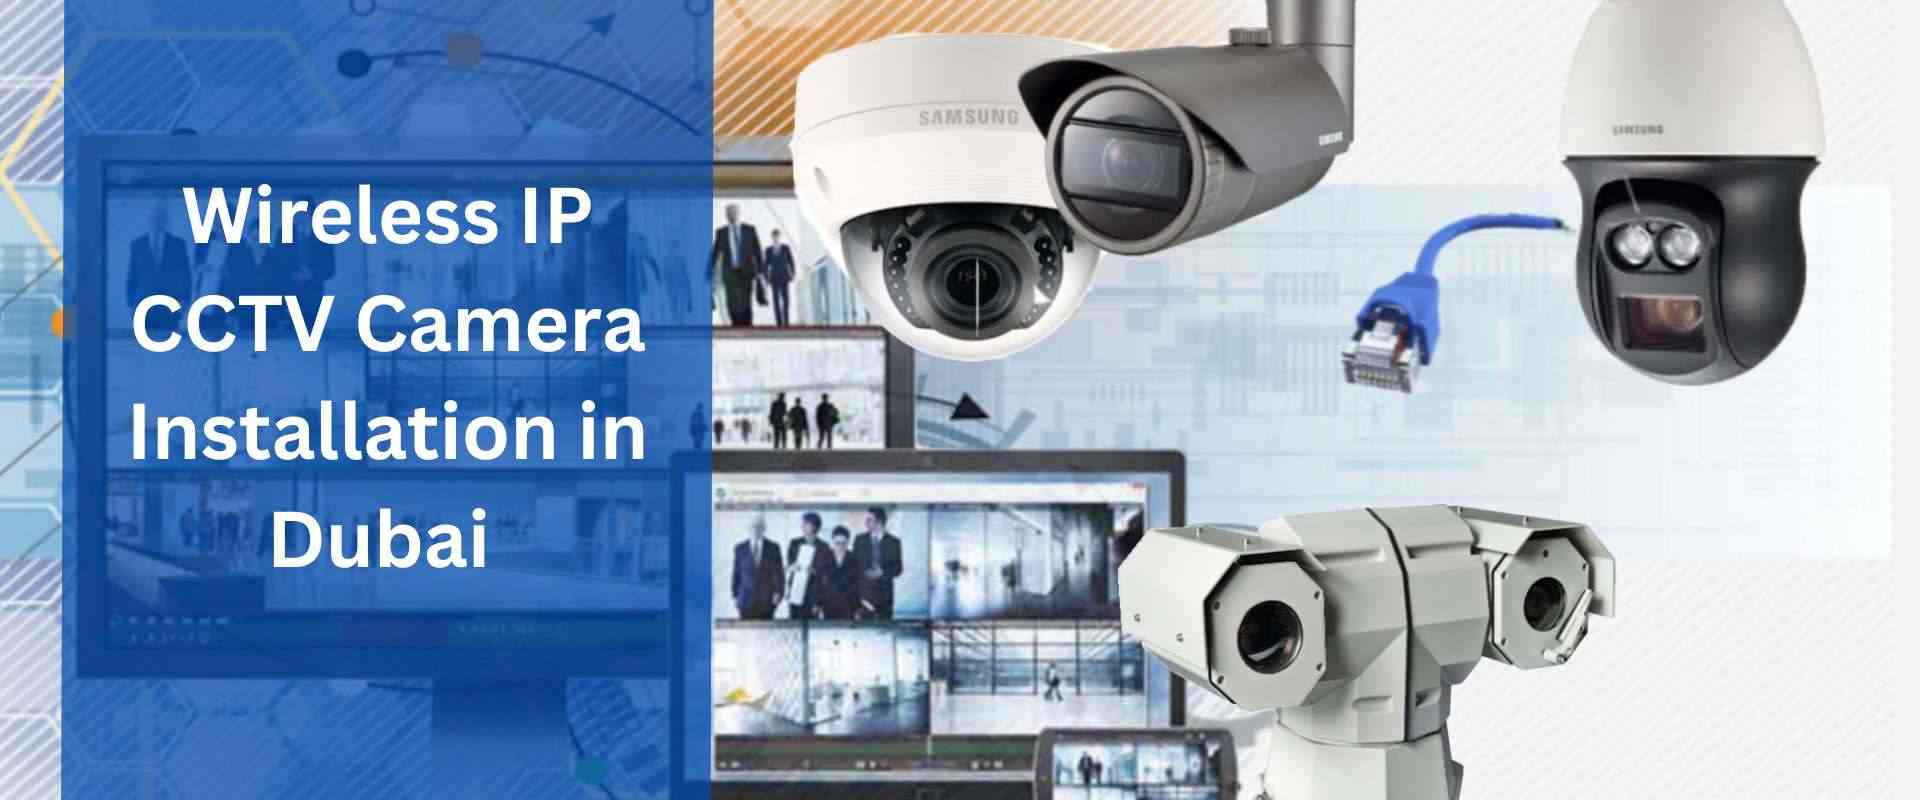 Wireless IP CCTV Camera Installation Dubai